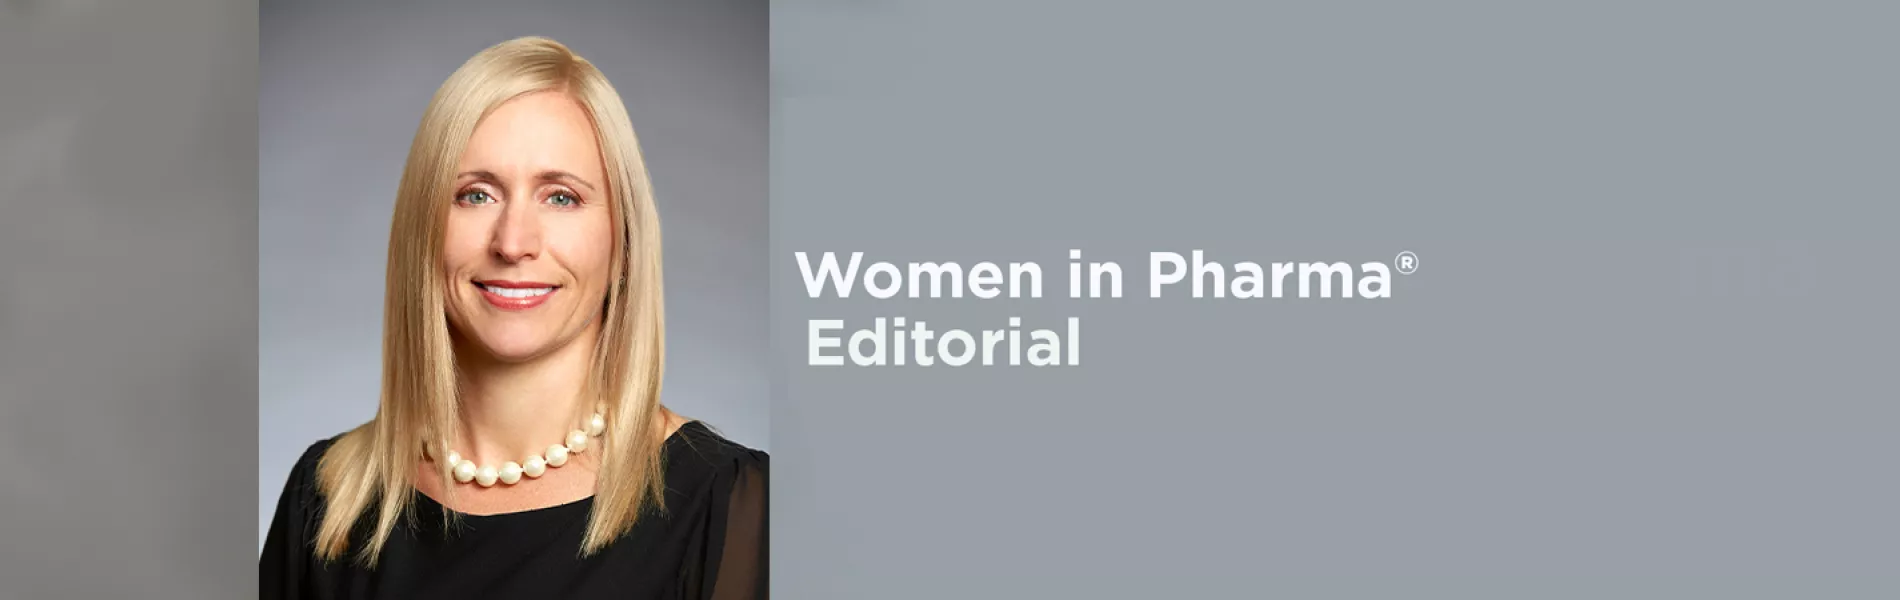 Women in Pharma® editorial banner